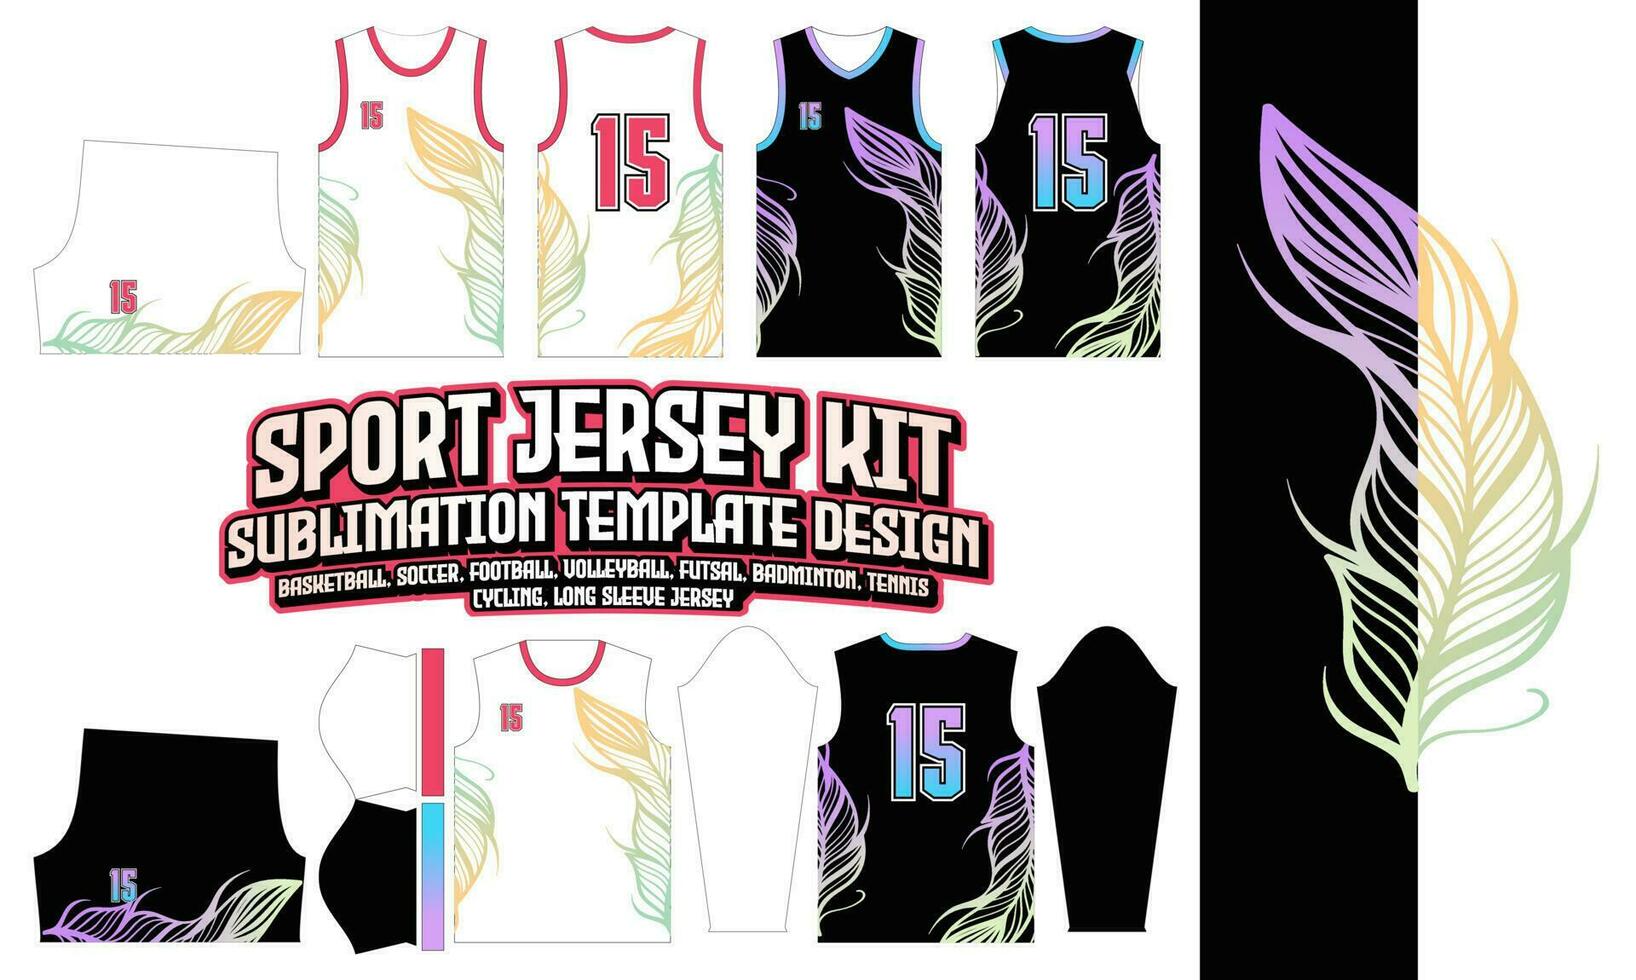 pena camisa gradiente design vestuário sublimação layout futebol futebol basquete vôlei badminton futsal vetor